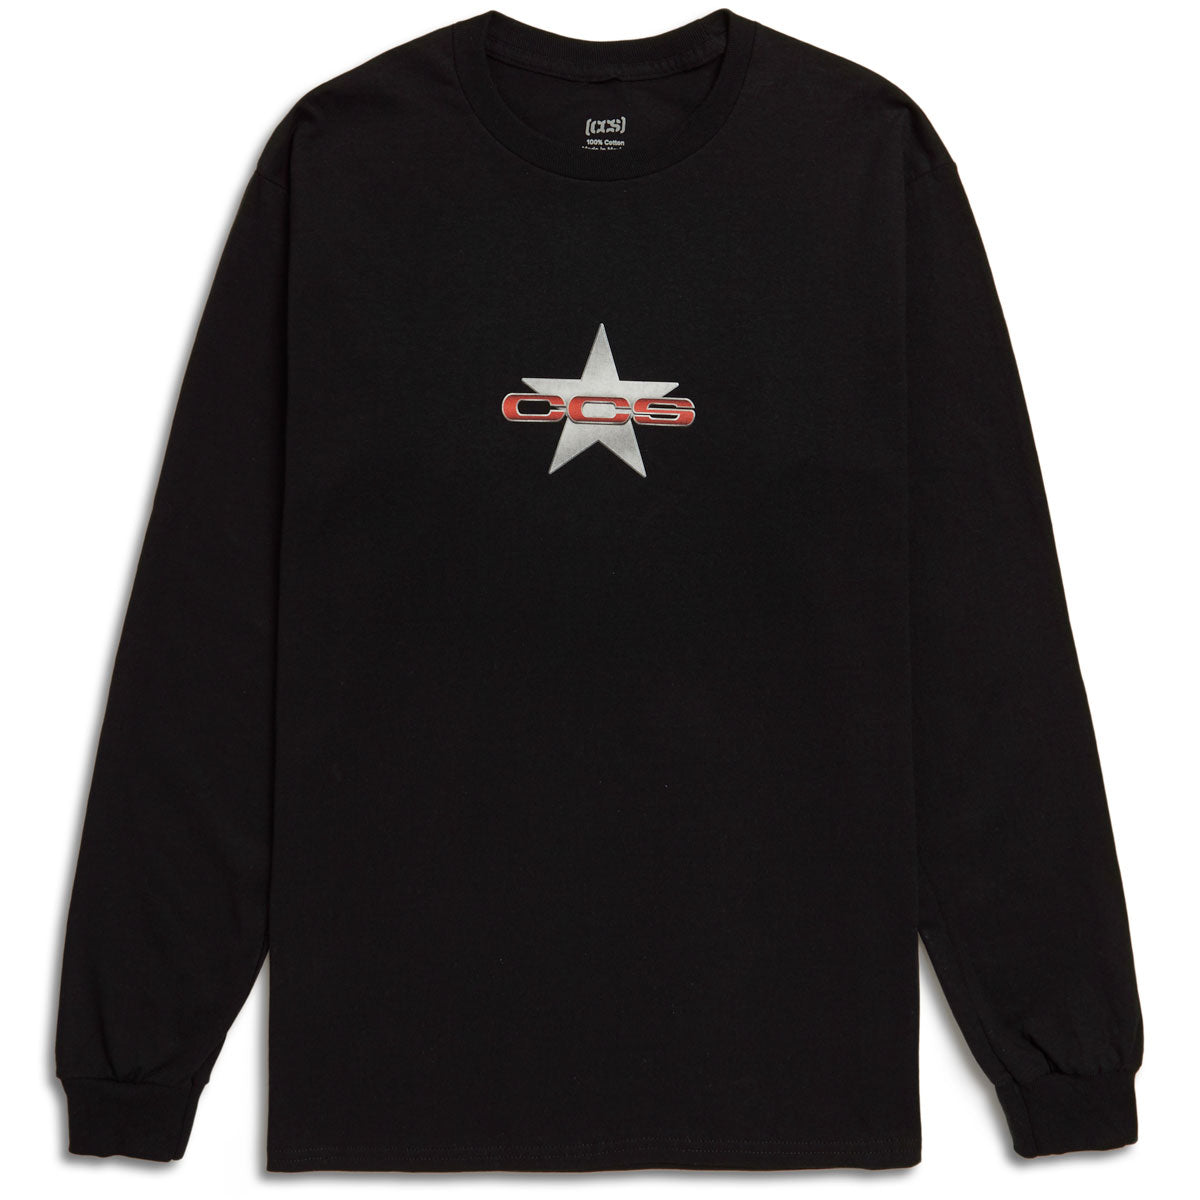 CCS 97 Star Long Sleeve T-Shirt - Black - LG image 1